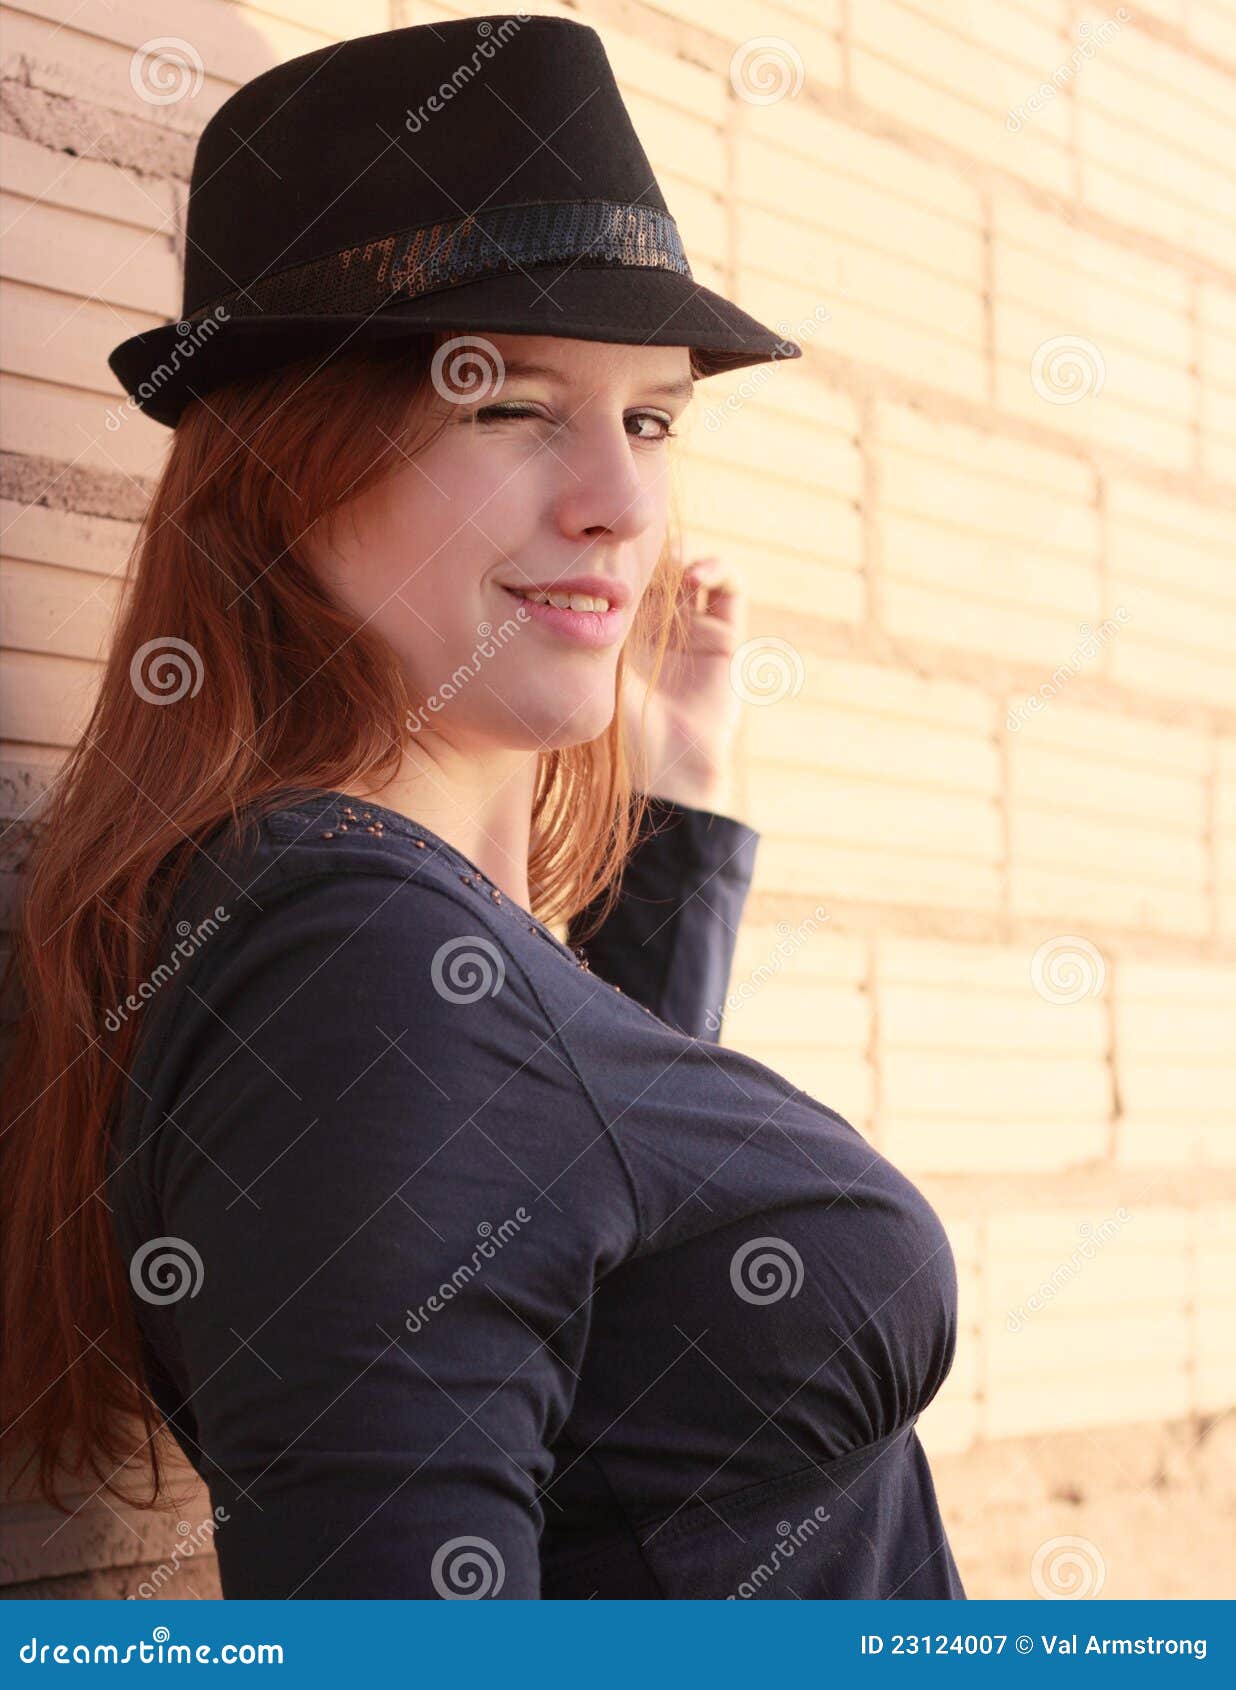 A Flirty Wink stock image. Image of female, flirt, brick - 23124007